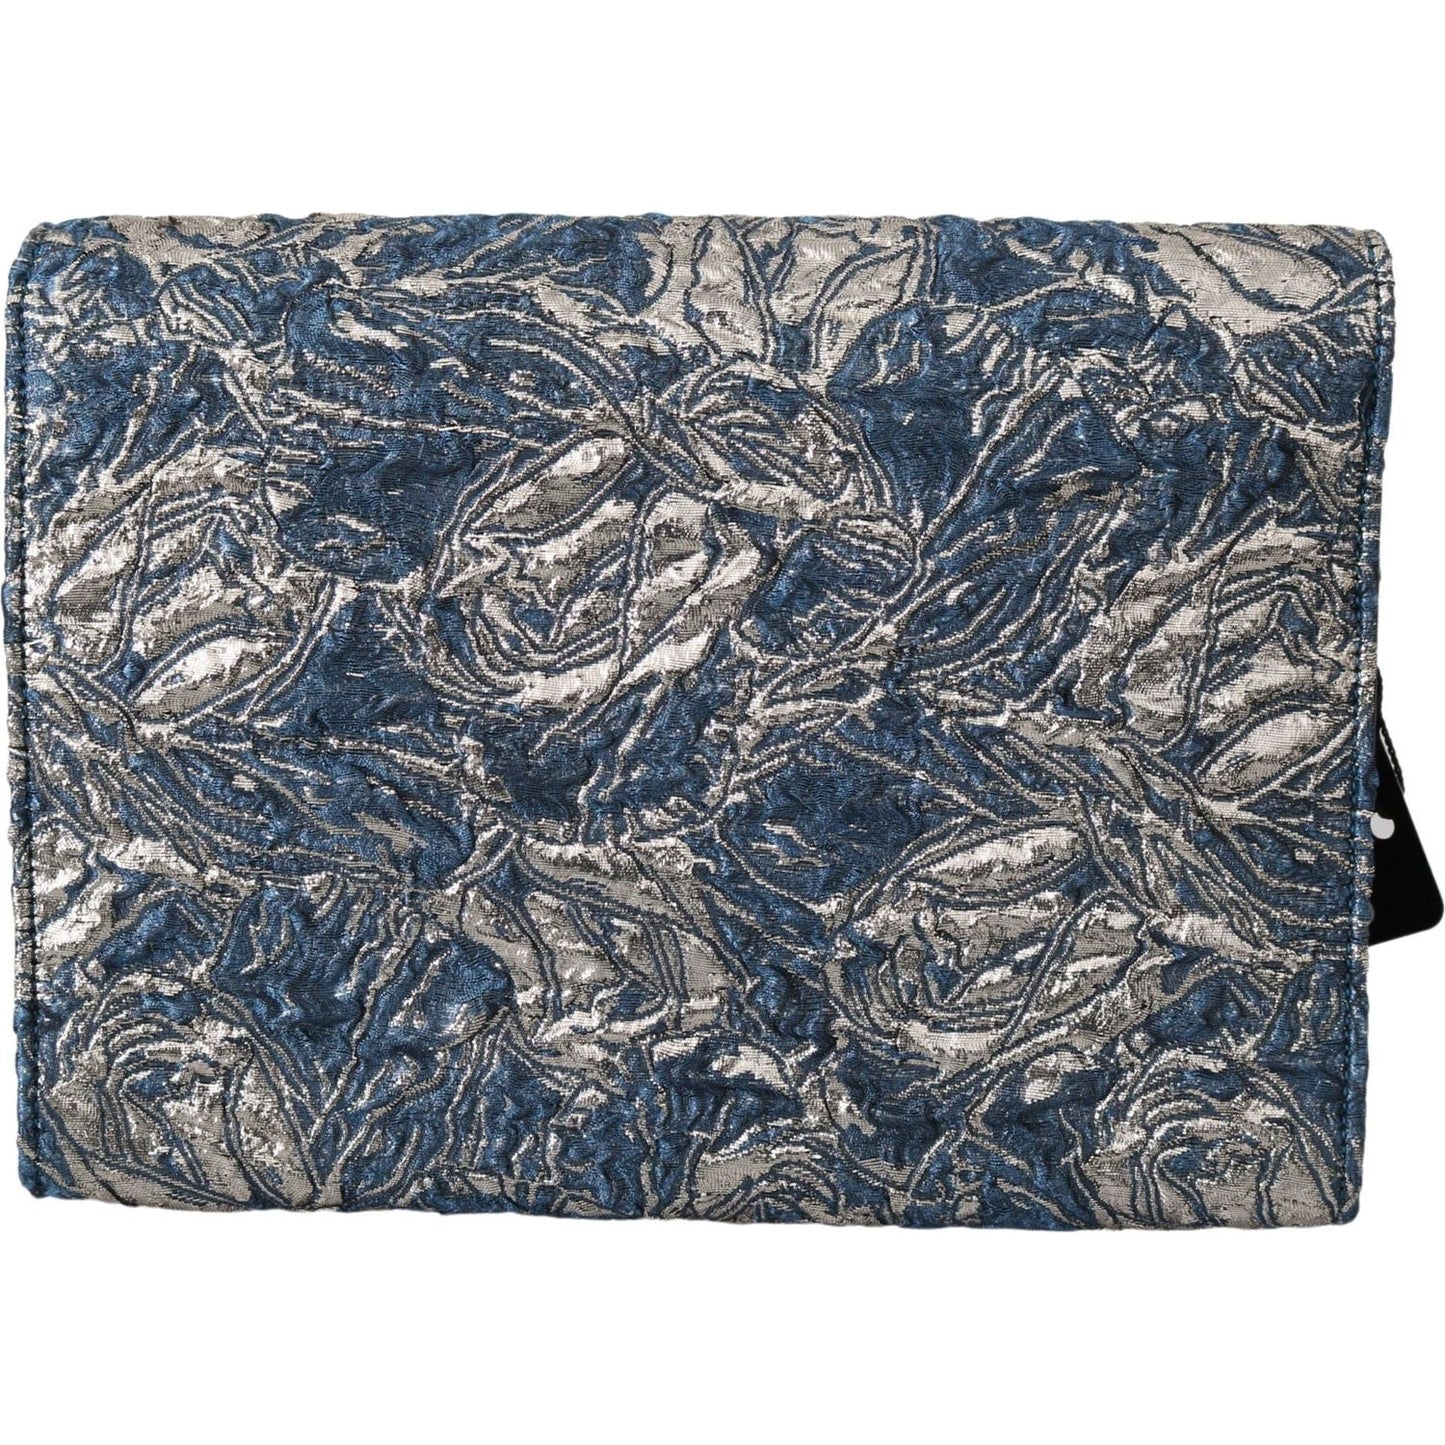 Dolce & Gabbana Elegant Blue Croc-Print Briefcase Clutch Briefcase blue-silver-jacquard-leather-document-briefcase-bag IMG_0200-1-bdab65d3-c81.jpg